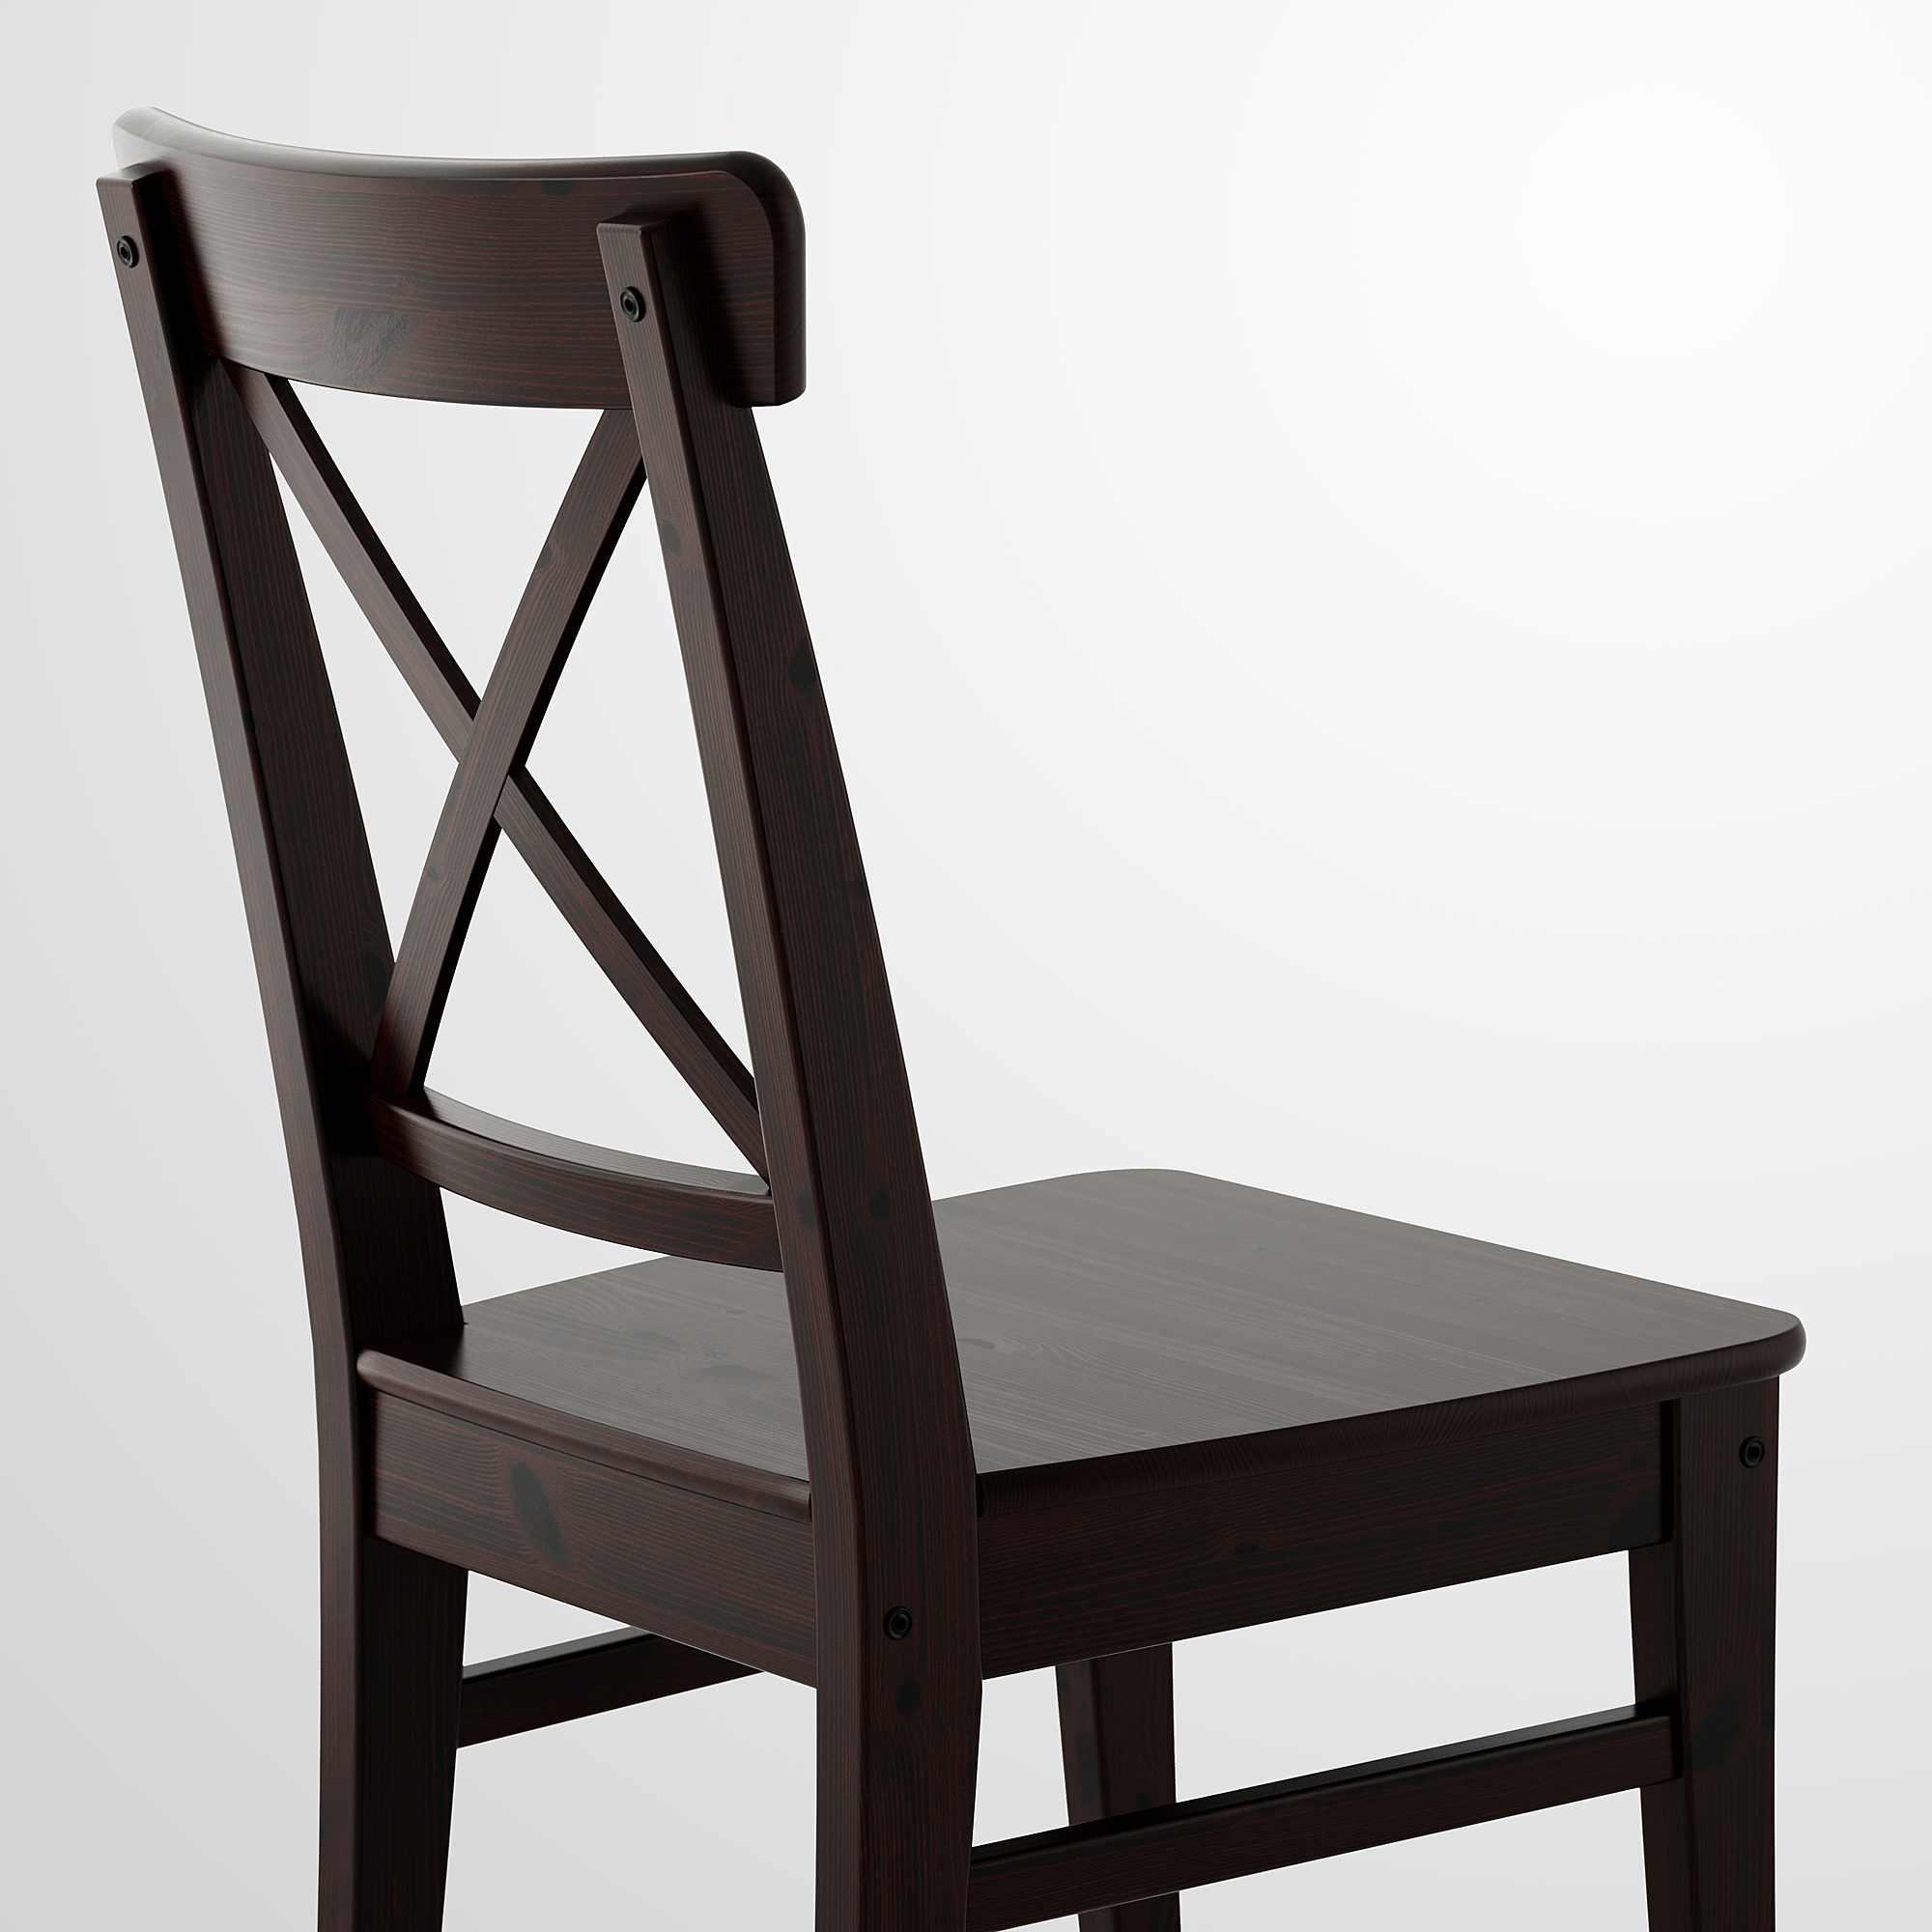 INGOLF chair